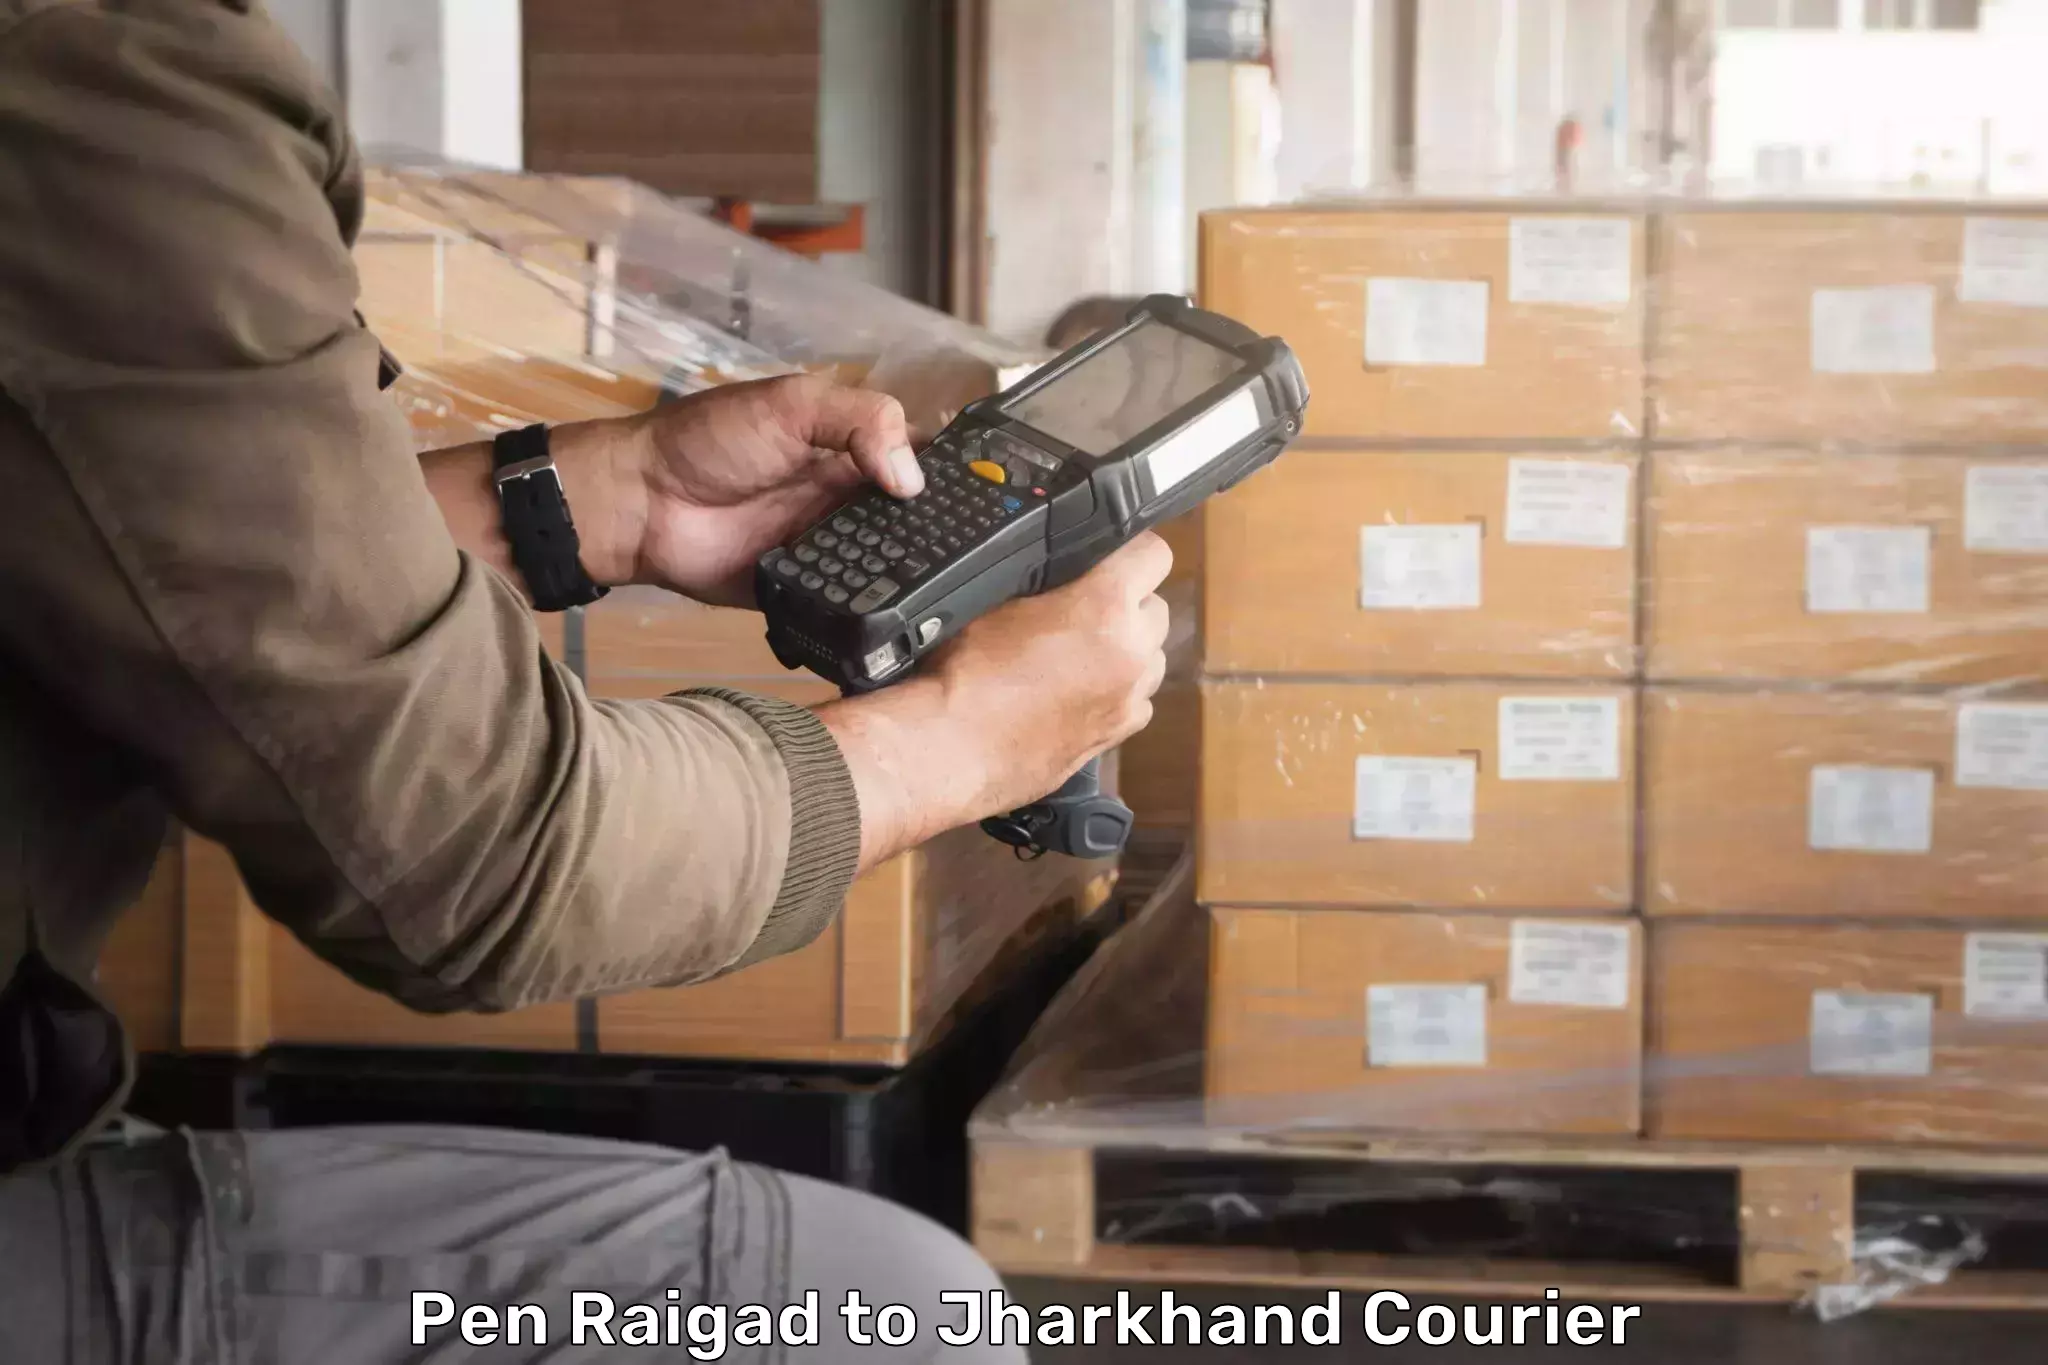 Personal parcel delivery in Pen Raigad to Govindpur